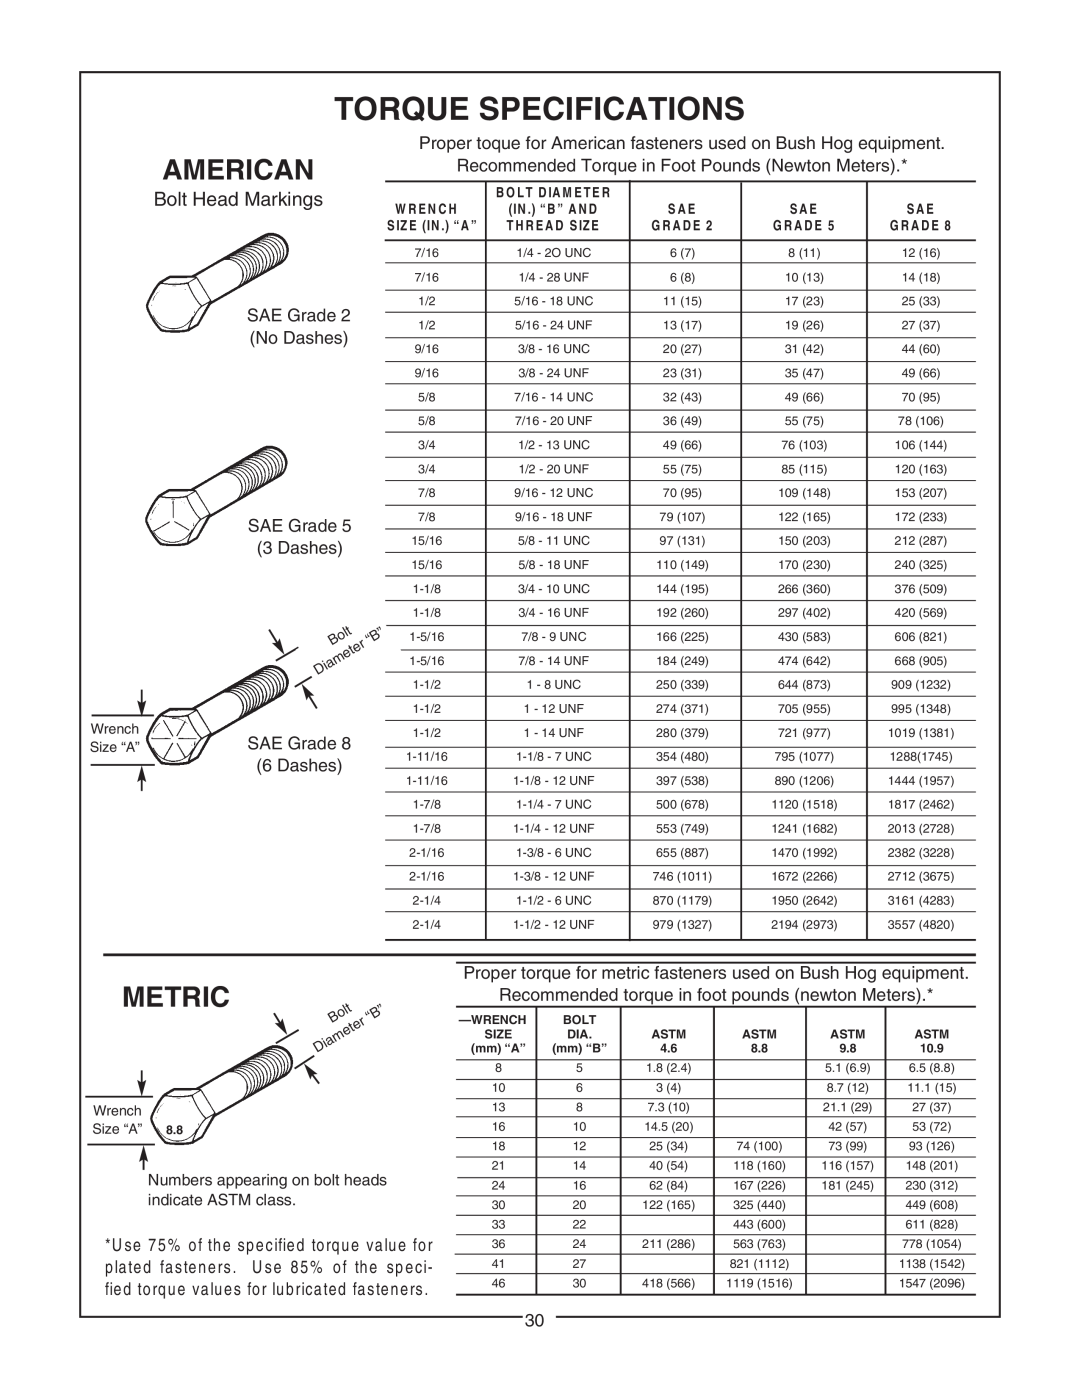 Bush Hog 5045 manual Torque Specifications, American, Metric, Bolt Head Markings, S Iz E In . “ A ” 